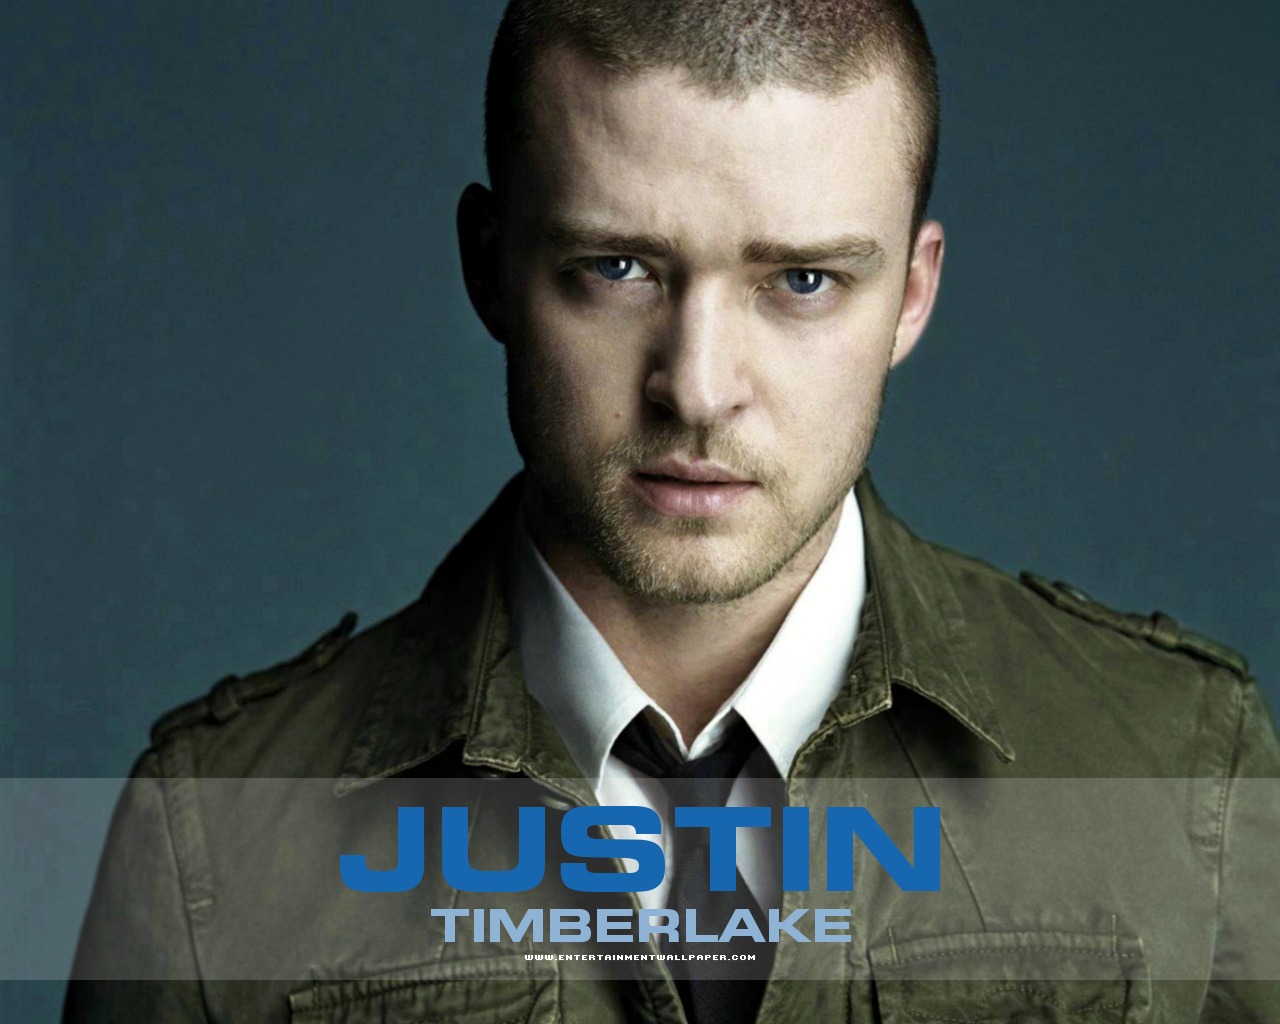 Timberlake - JUSTIN TIMBERLAKE Wallpaper (736344) - Fanpop